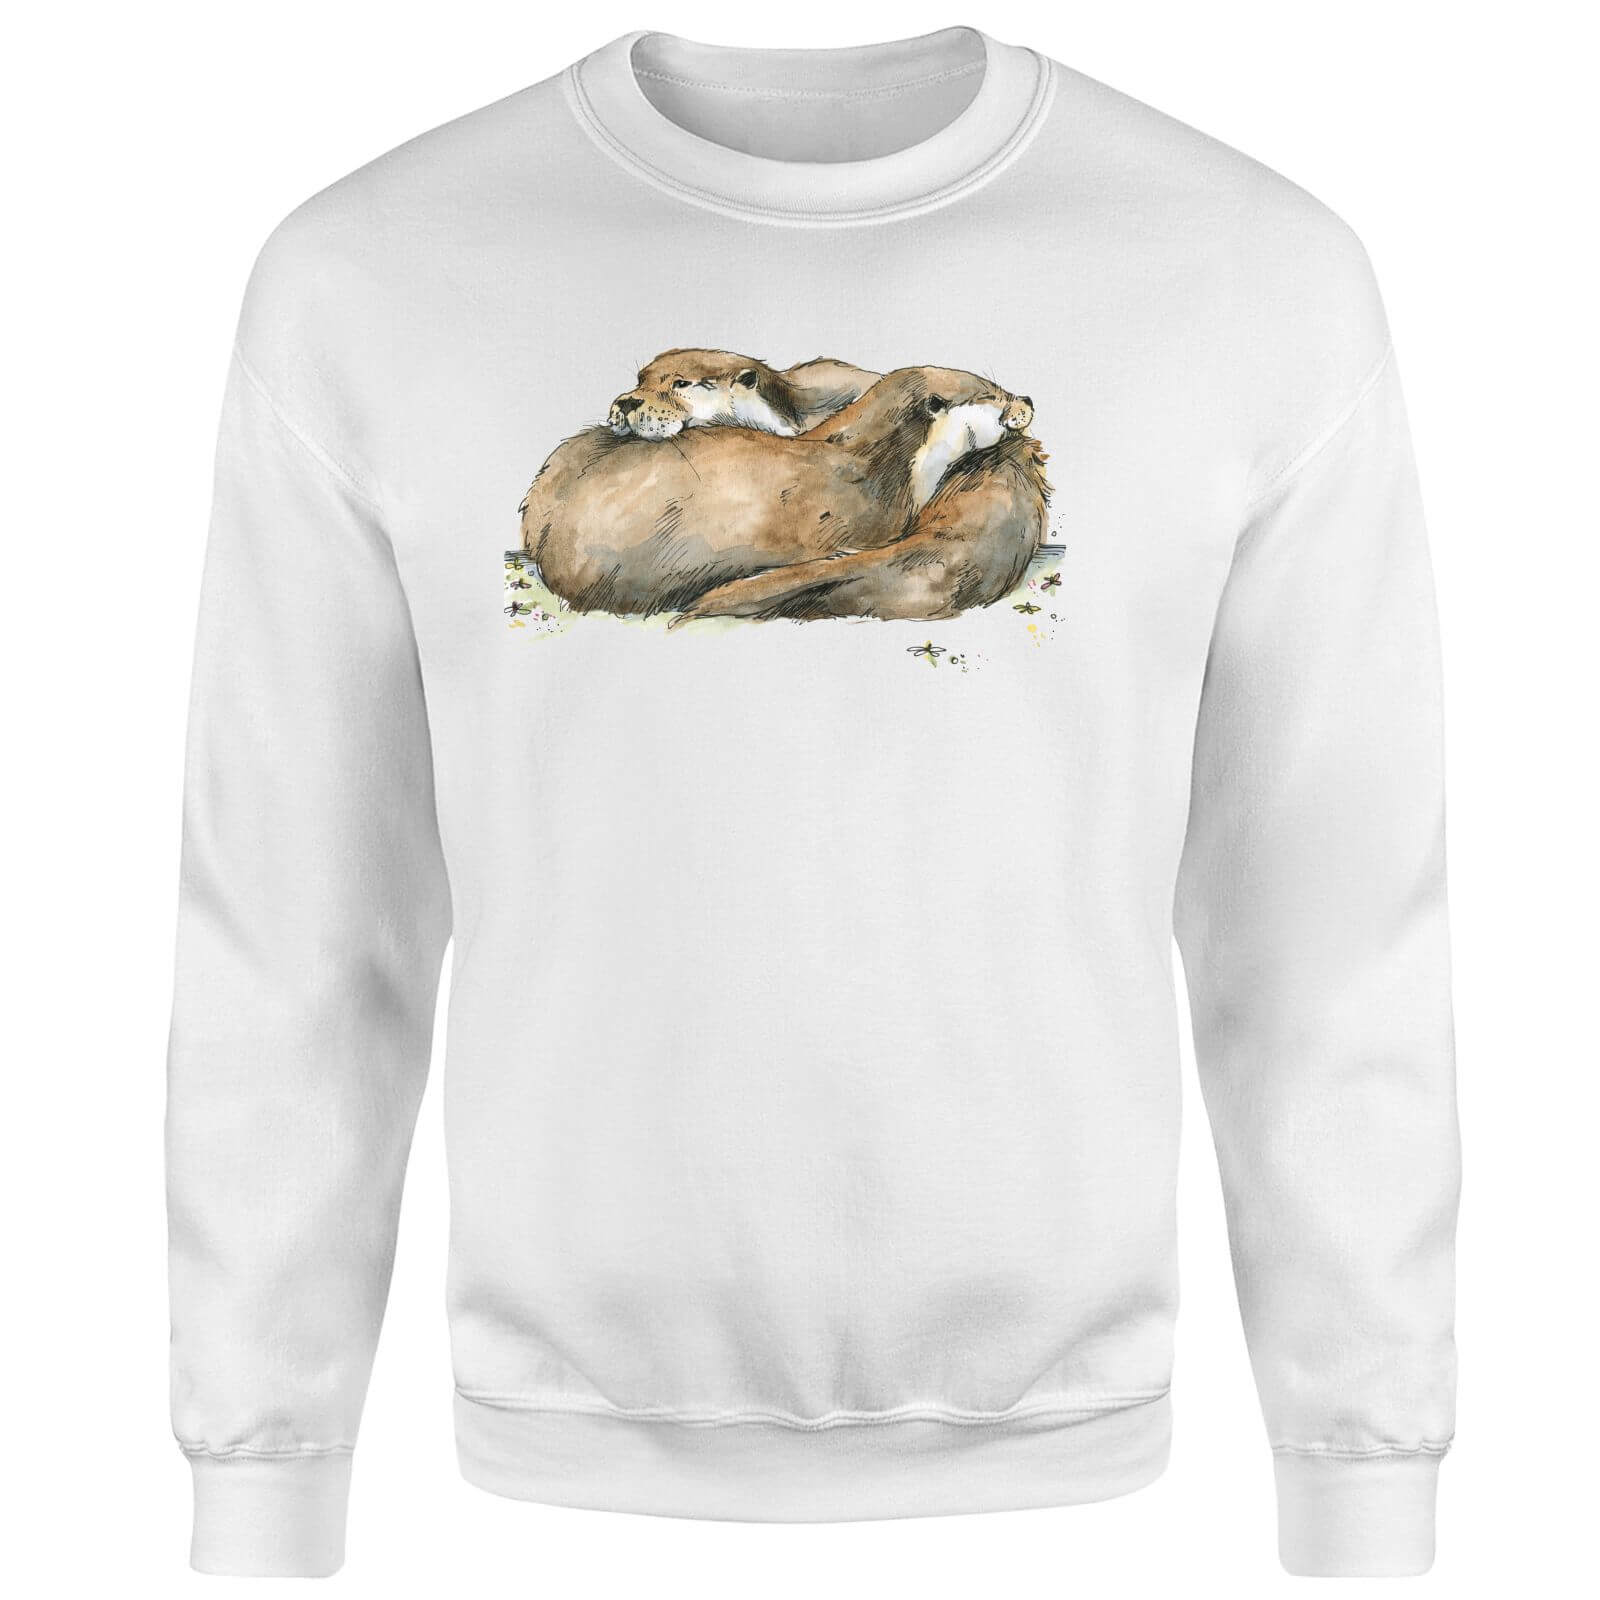 Snowtap Otters Sweatshirt - White - S - White